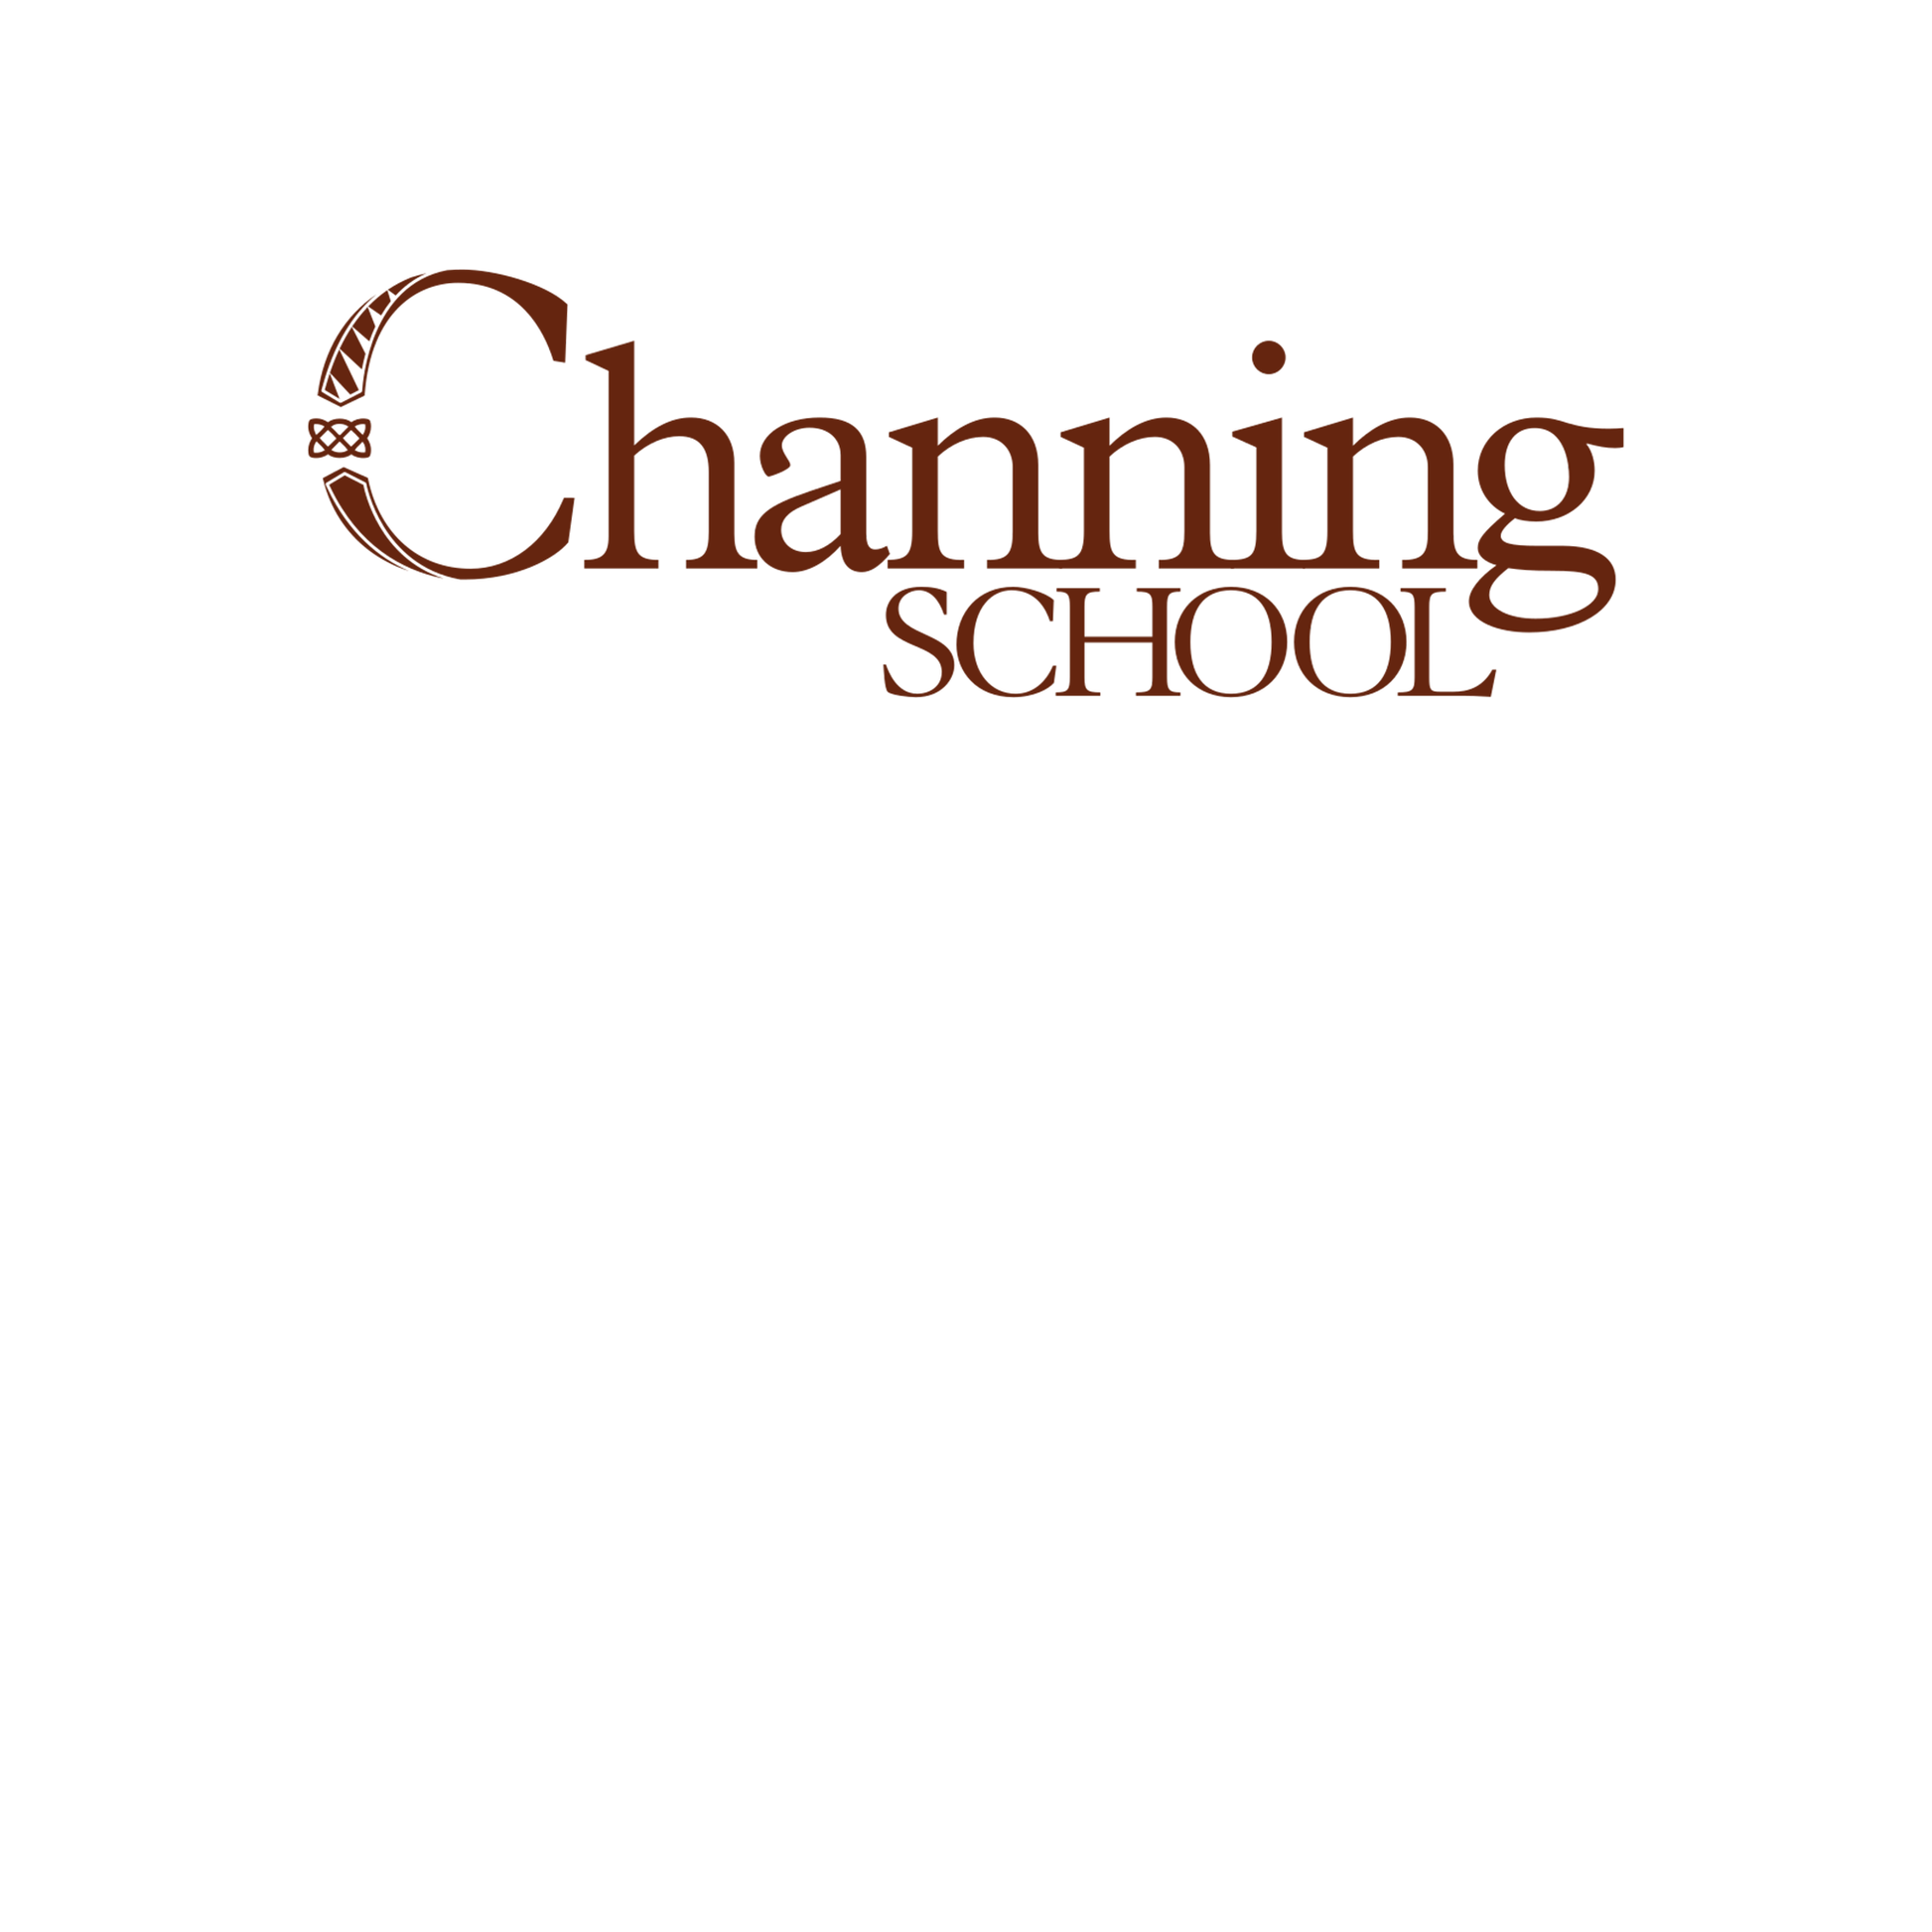 Channing School: 11+ Maths (2013) [97]